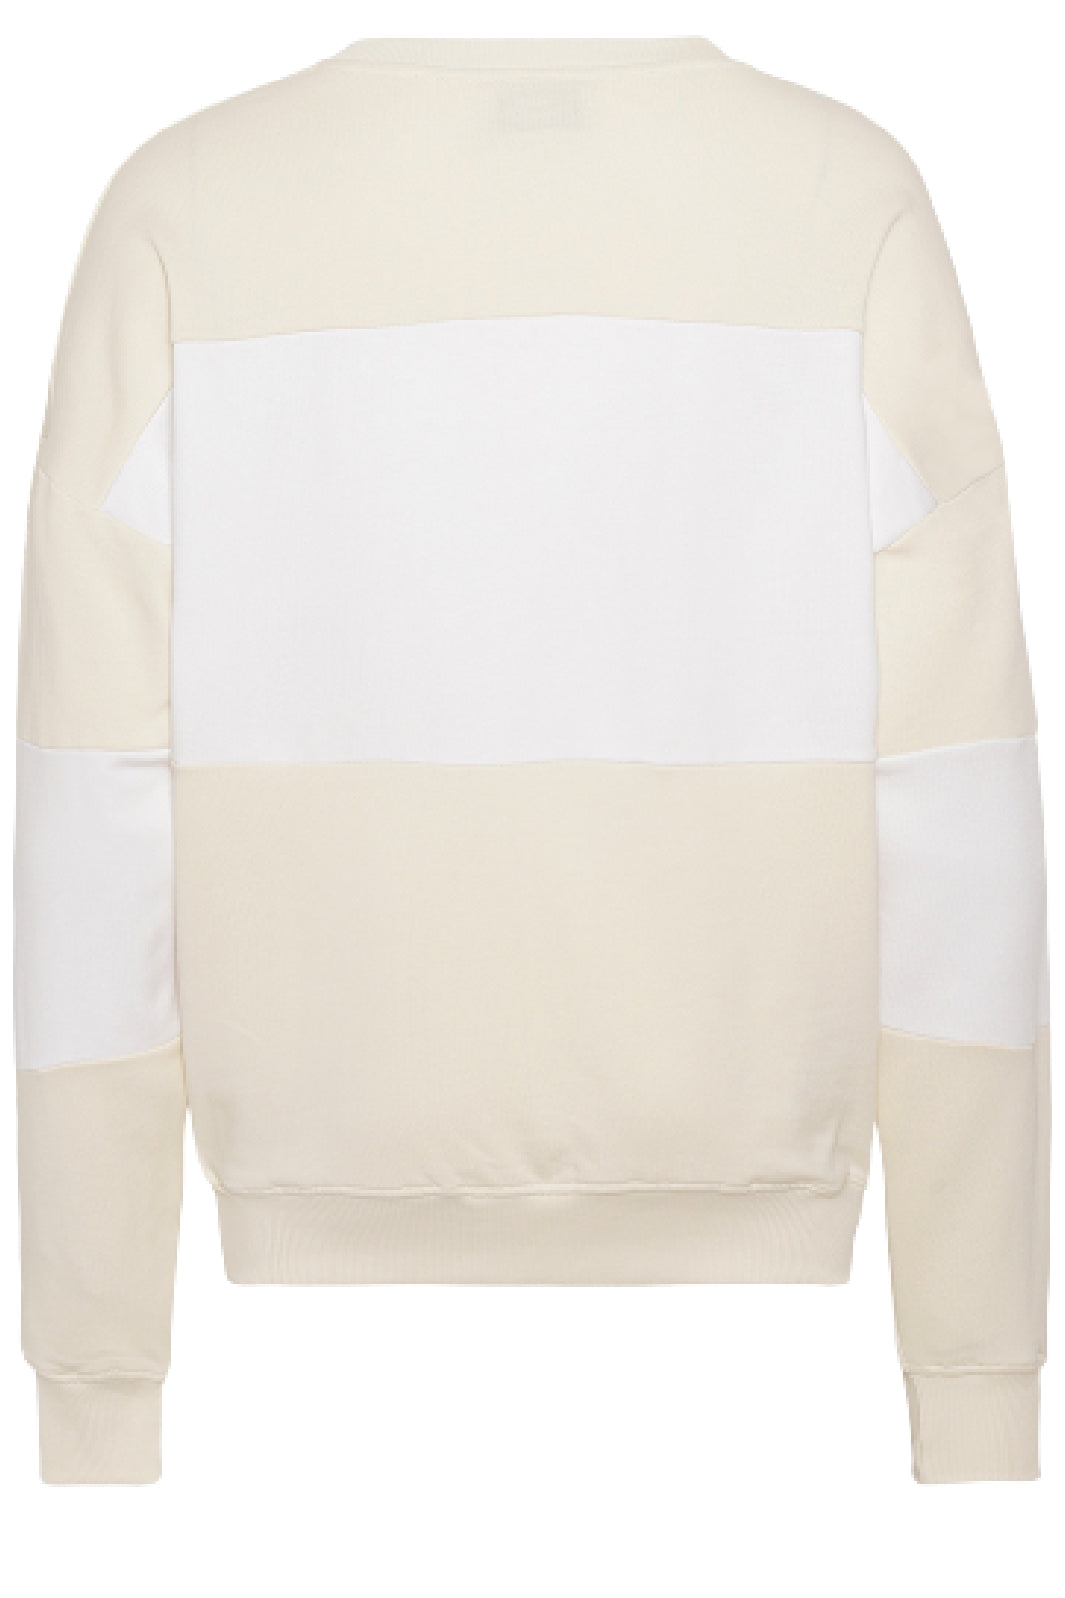 Ball - Sweatshirt J. Robinson - Of white Sweatshirt 